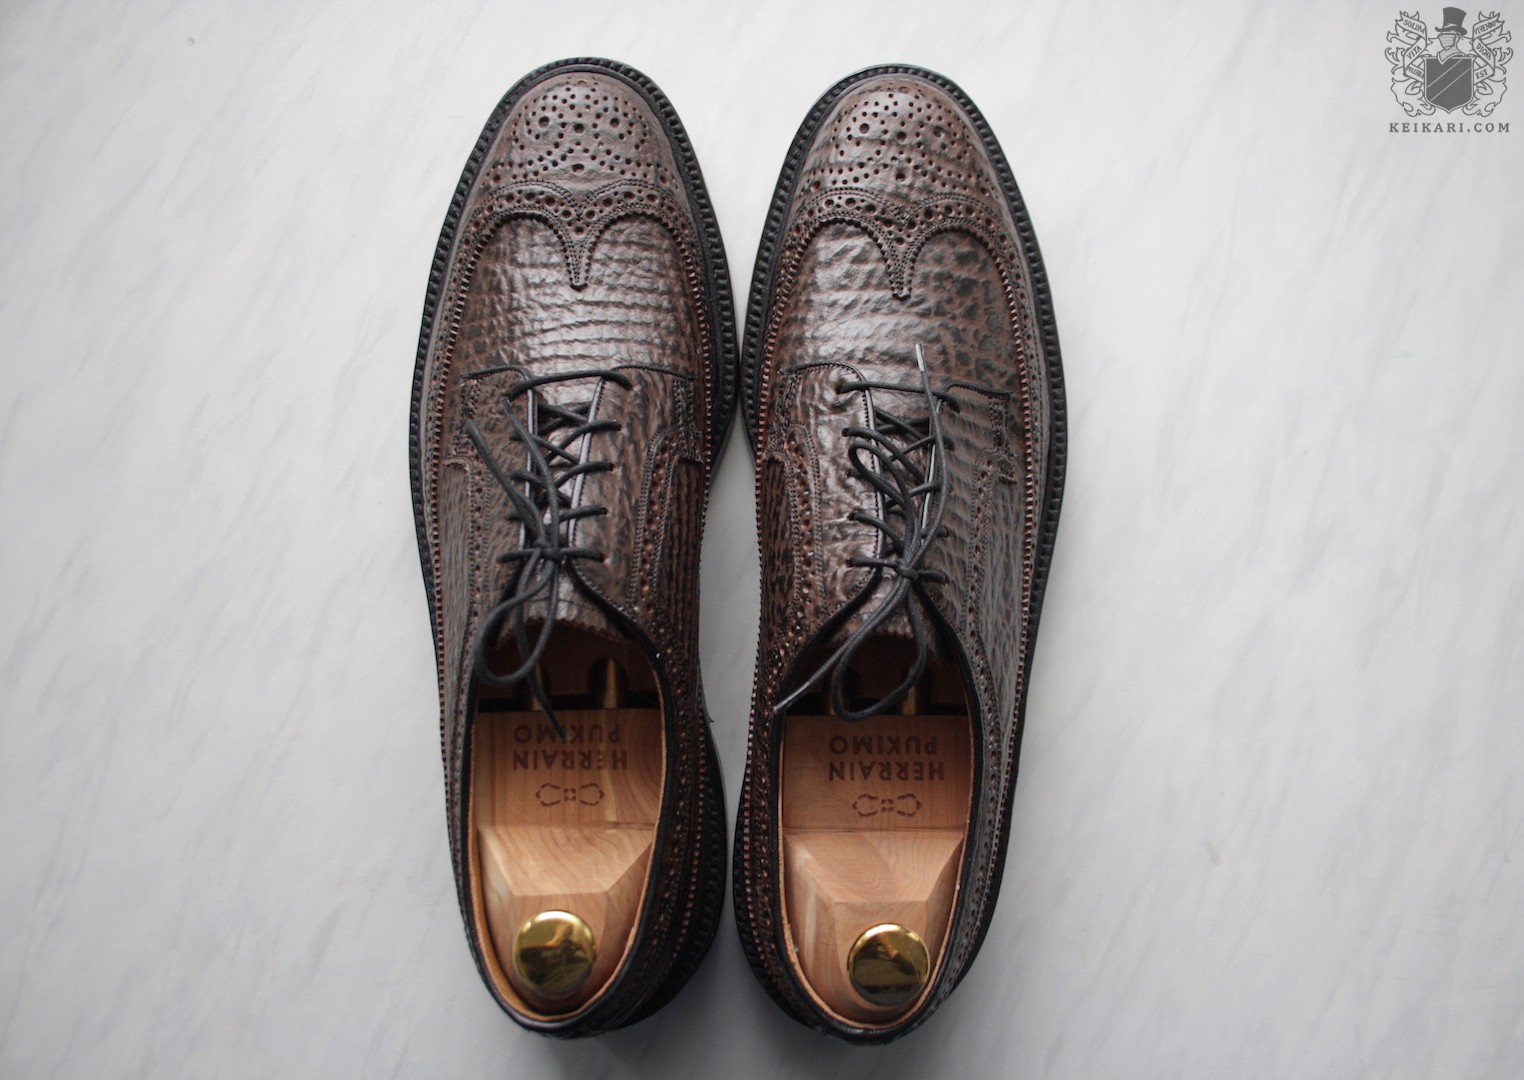 Vintage_Florsheim_sharkskin_leather_shoes_at_Keikari_dot_com05.jpg